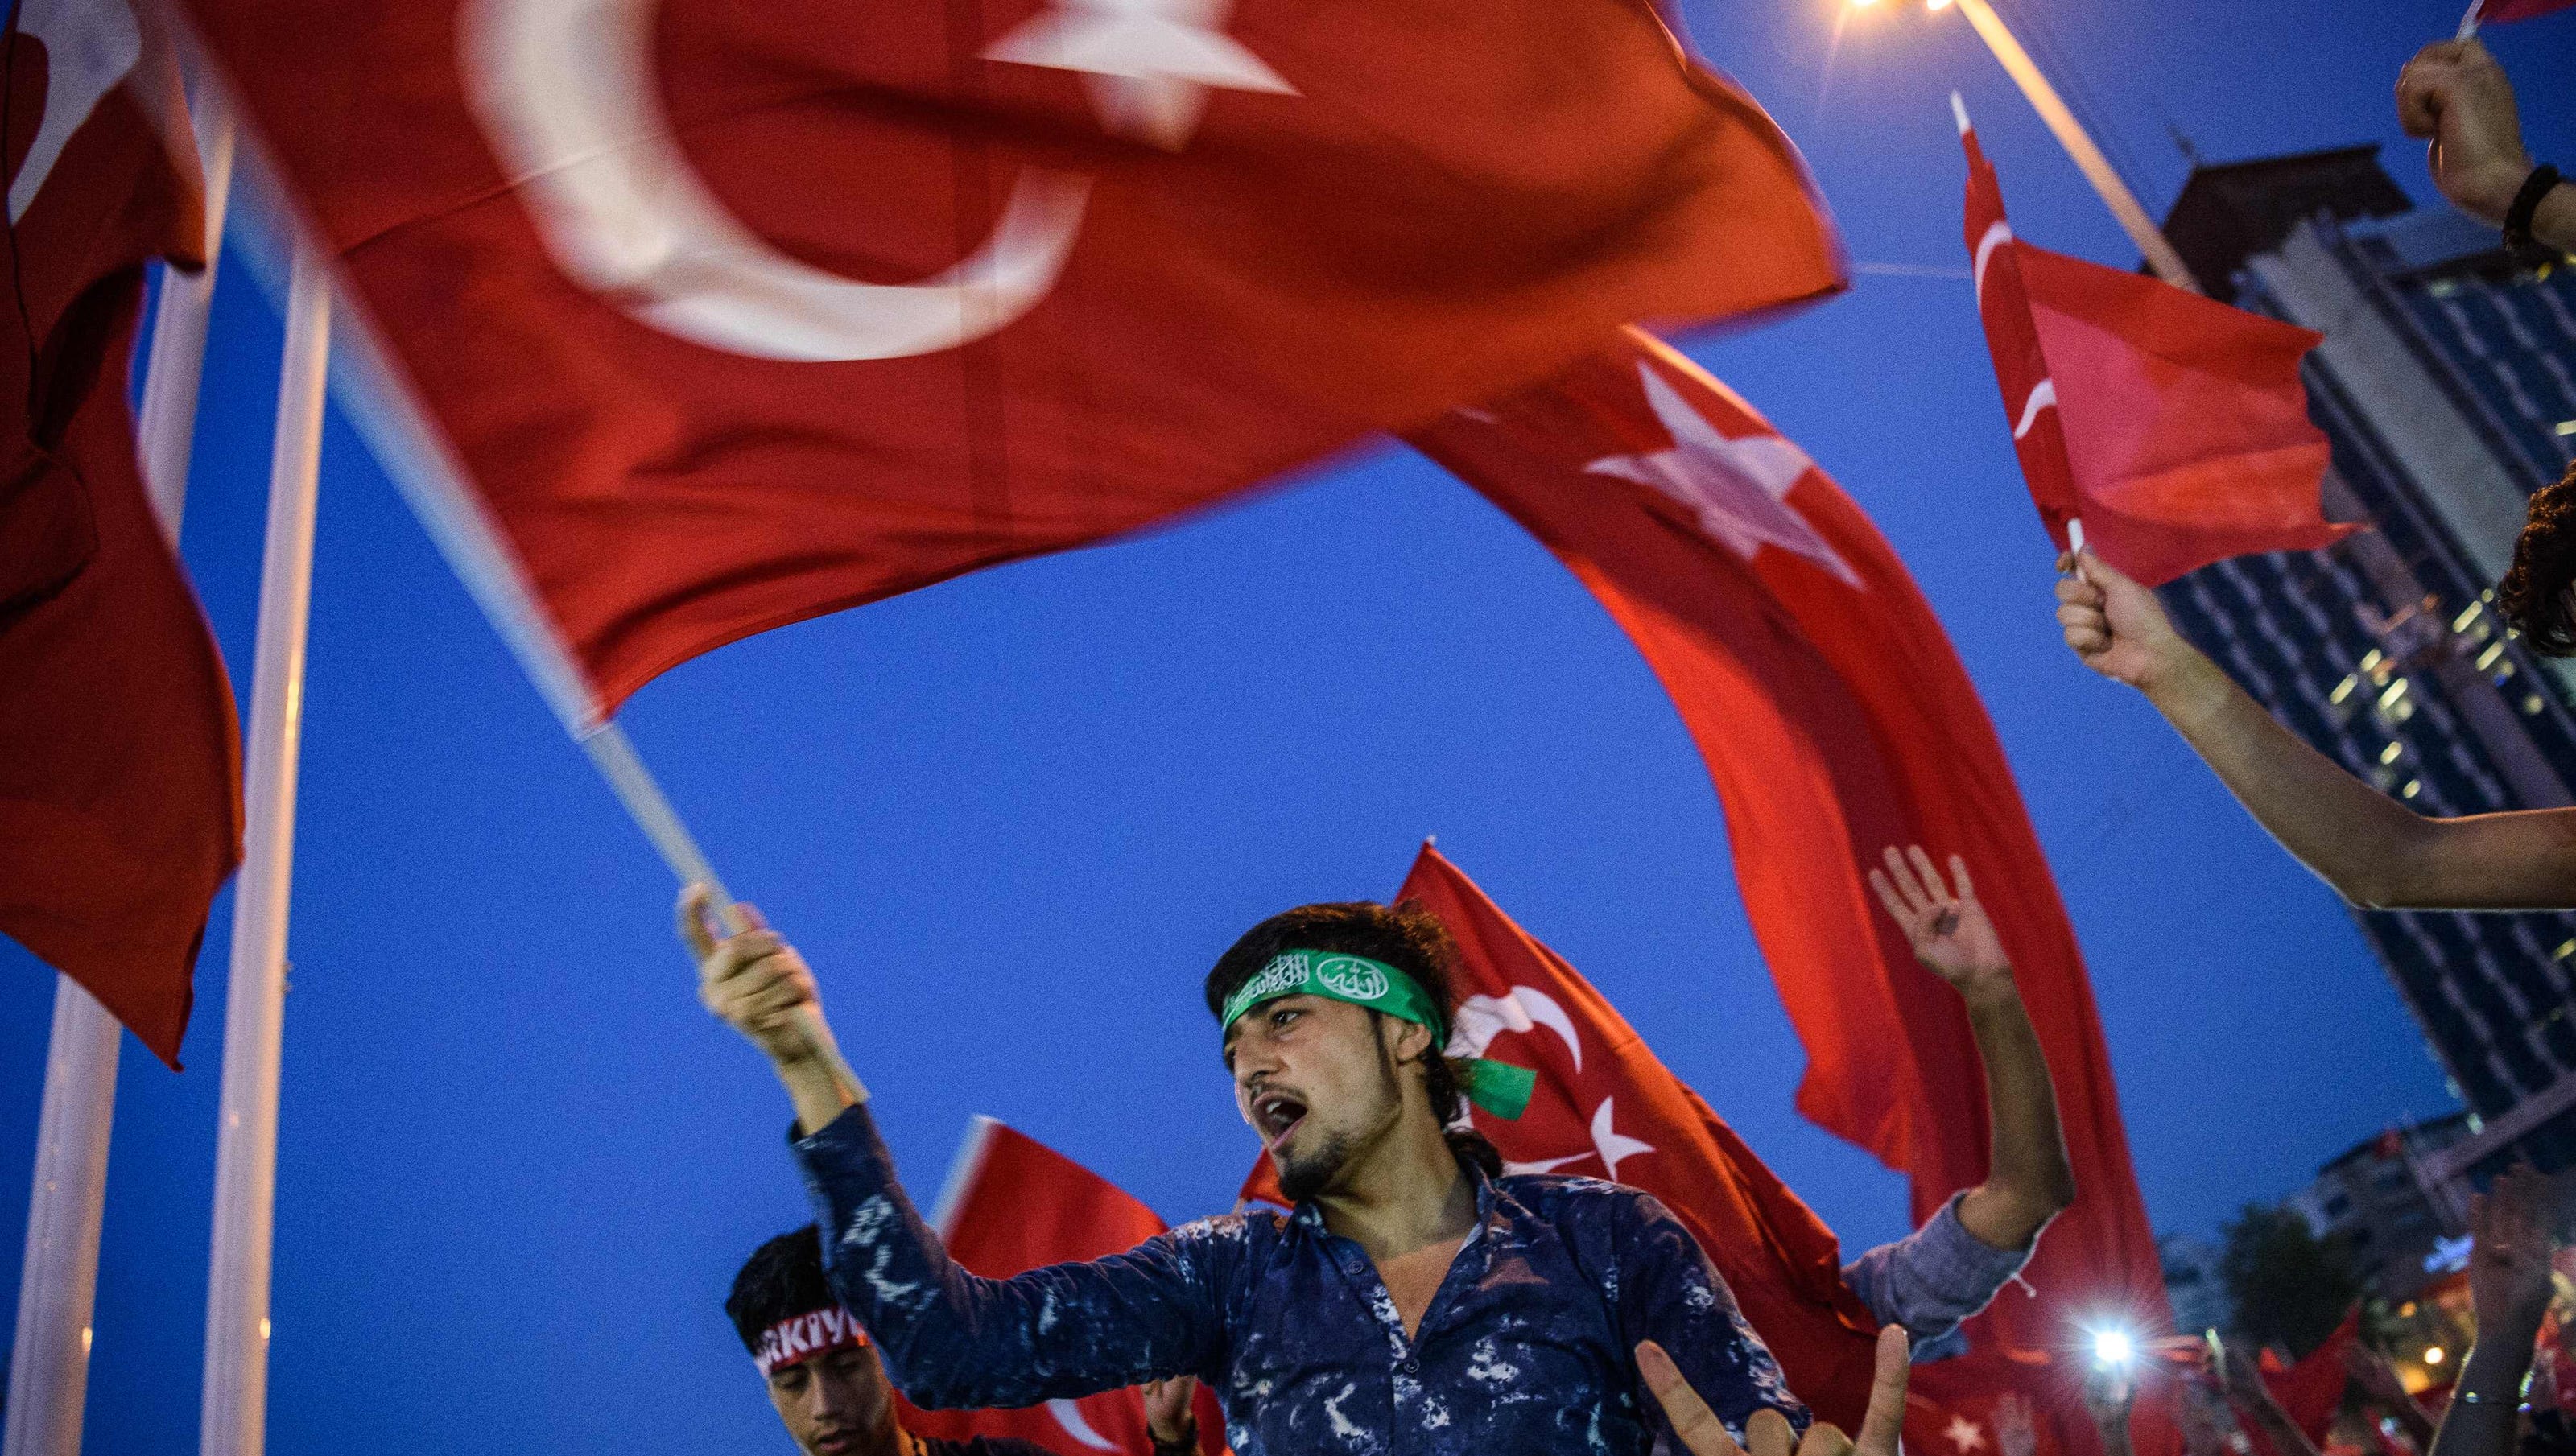 Сторона турков. Флаг Турции. Турки флаг. Турки в Турции. Турецкая революция.